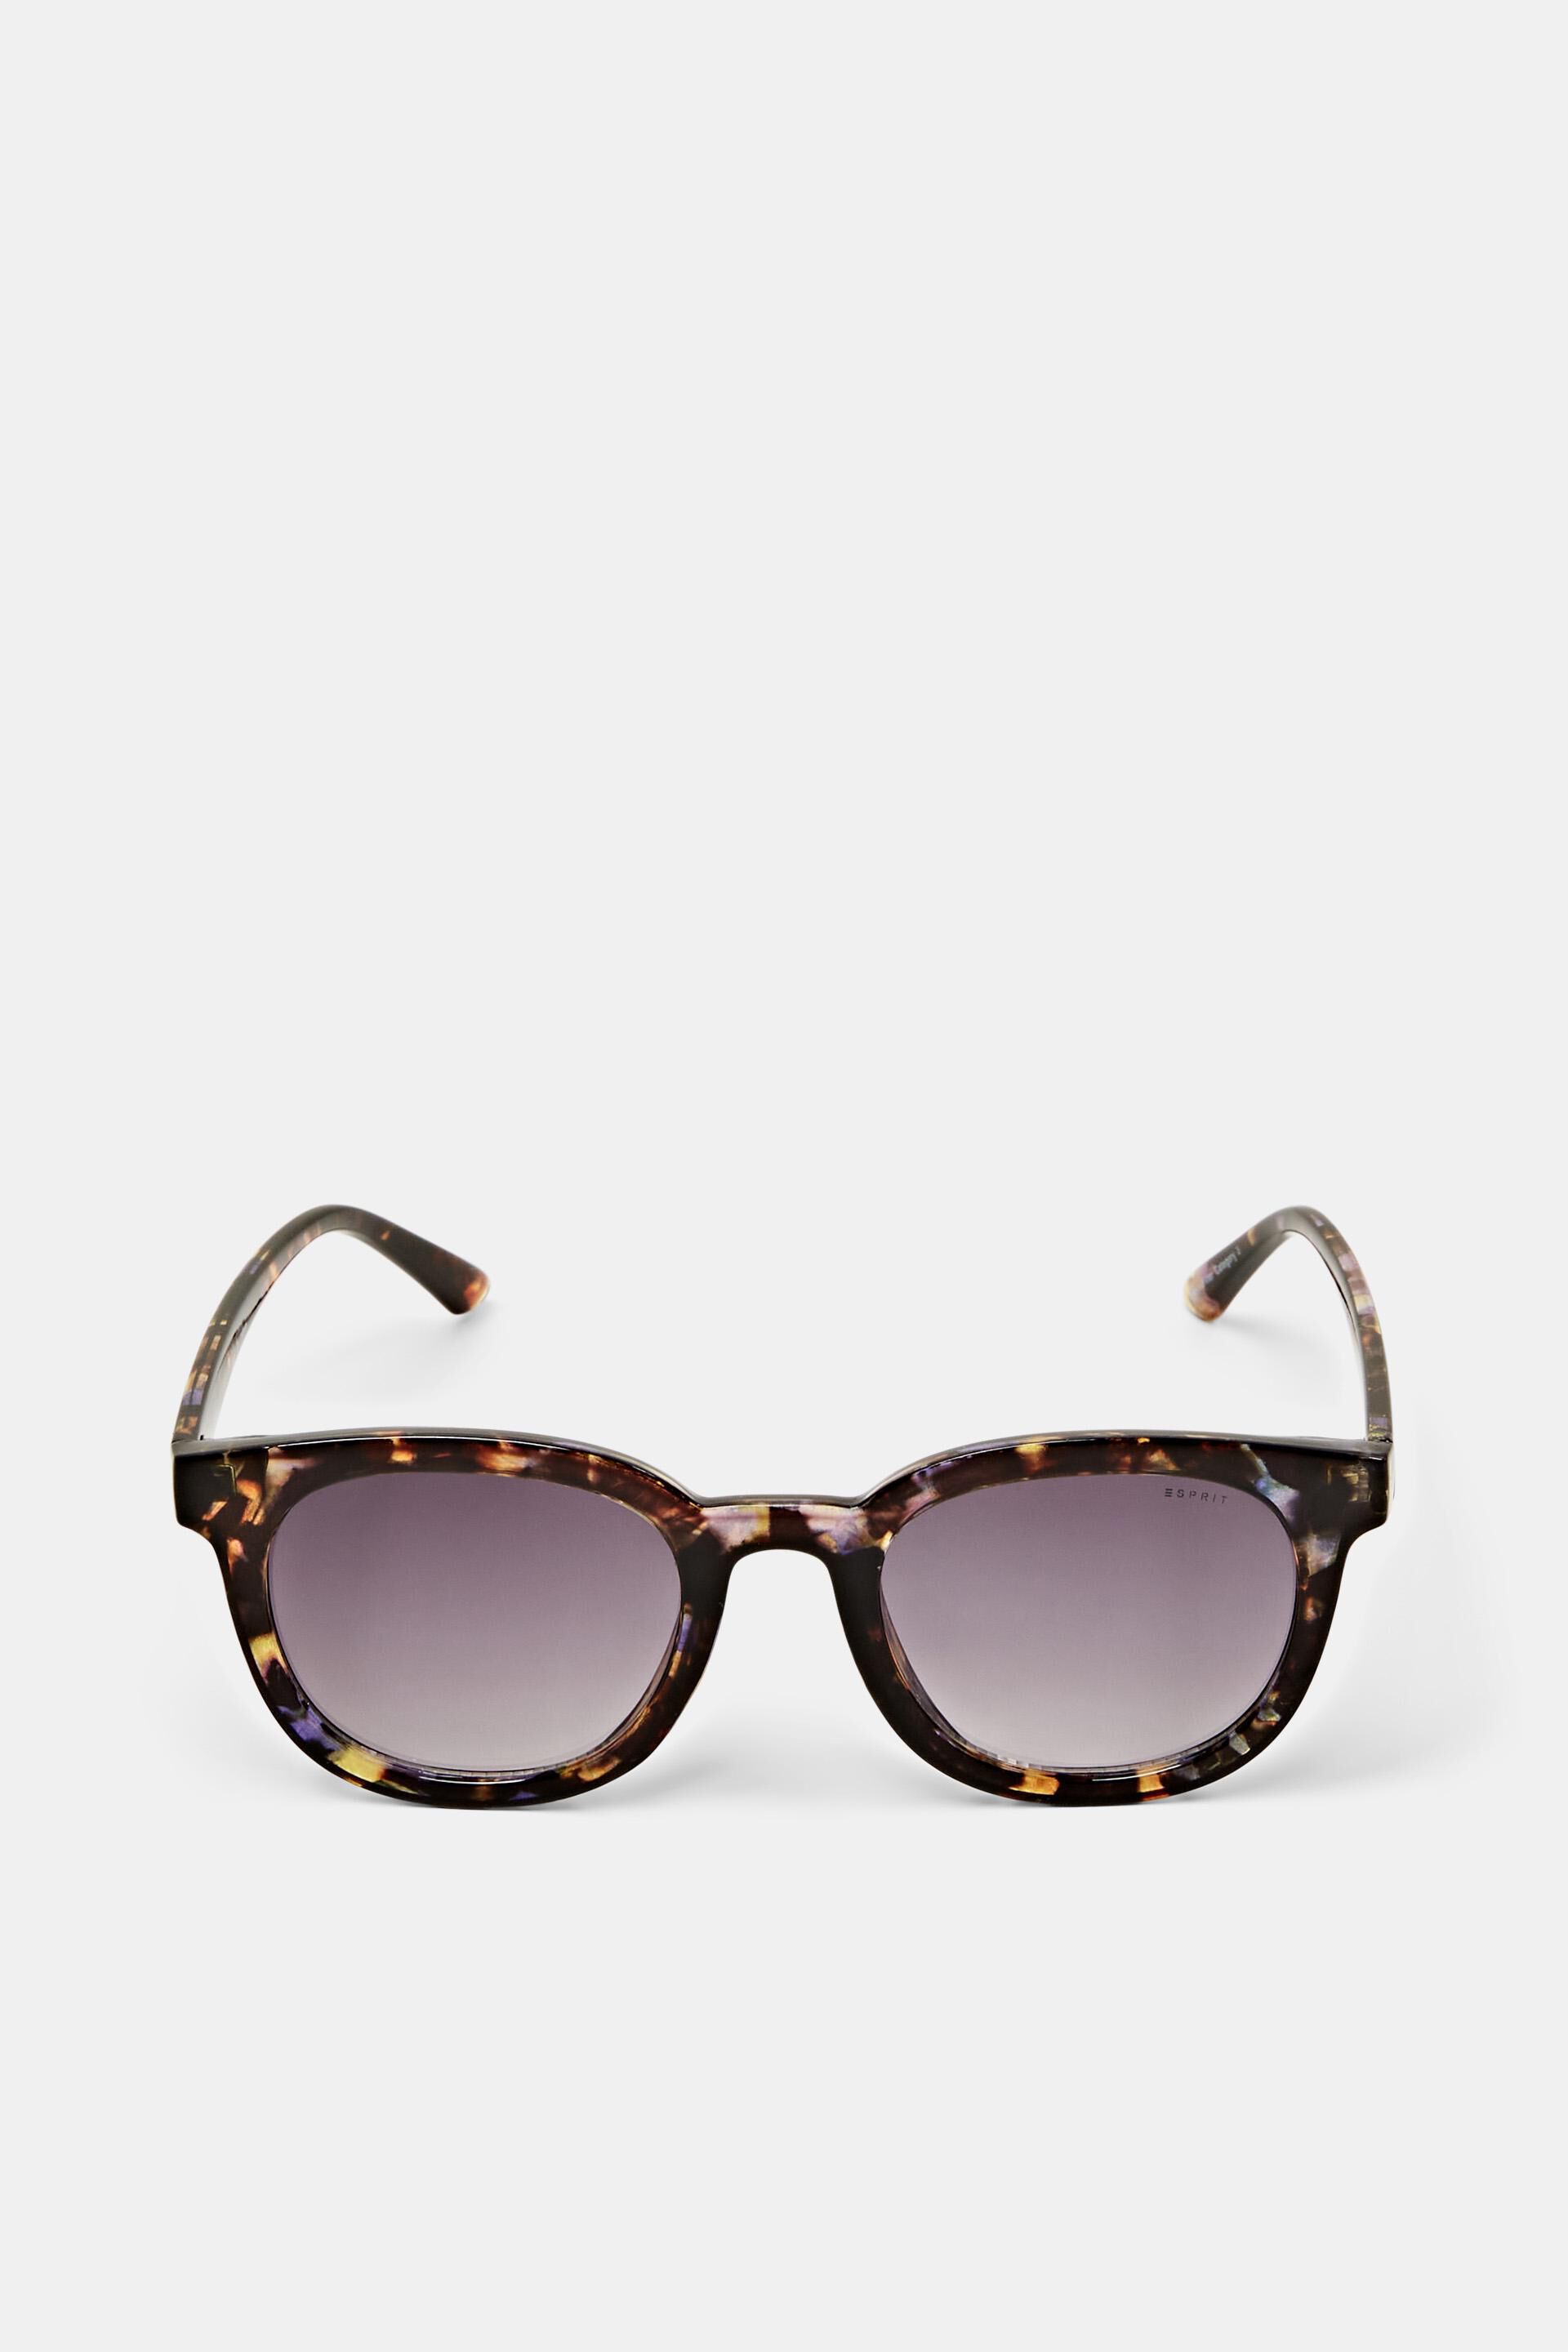 Esprit Online Store Round framed sunglasses